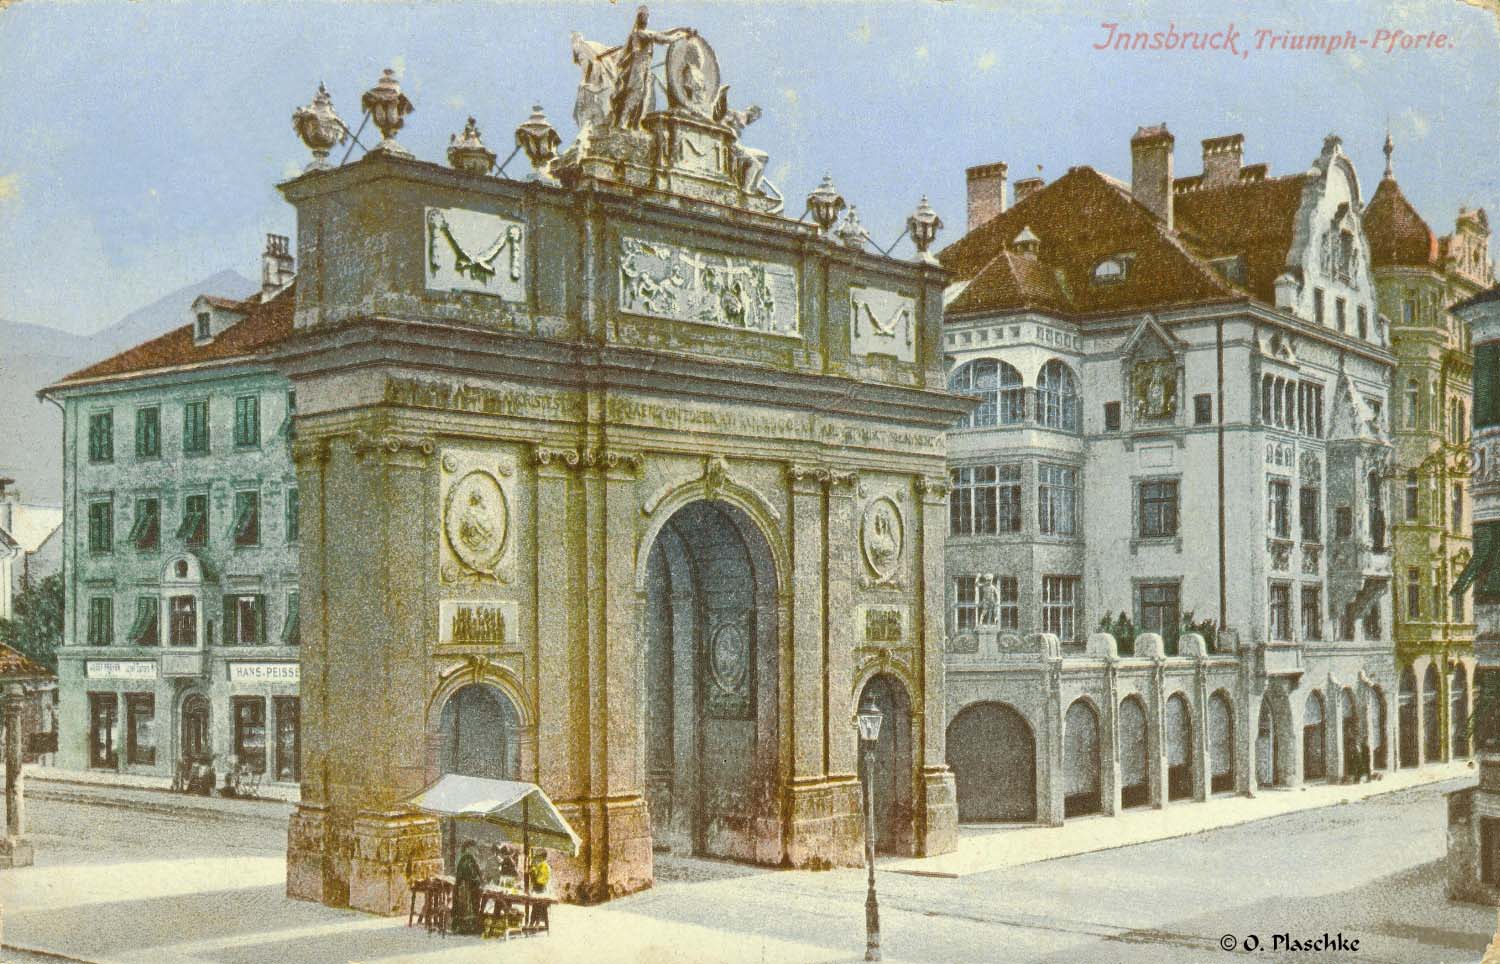 Triumph-Pforte, Innsbruck 1908